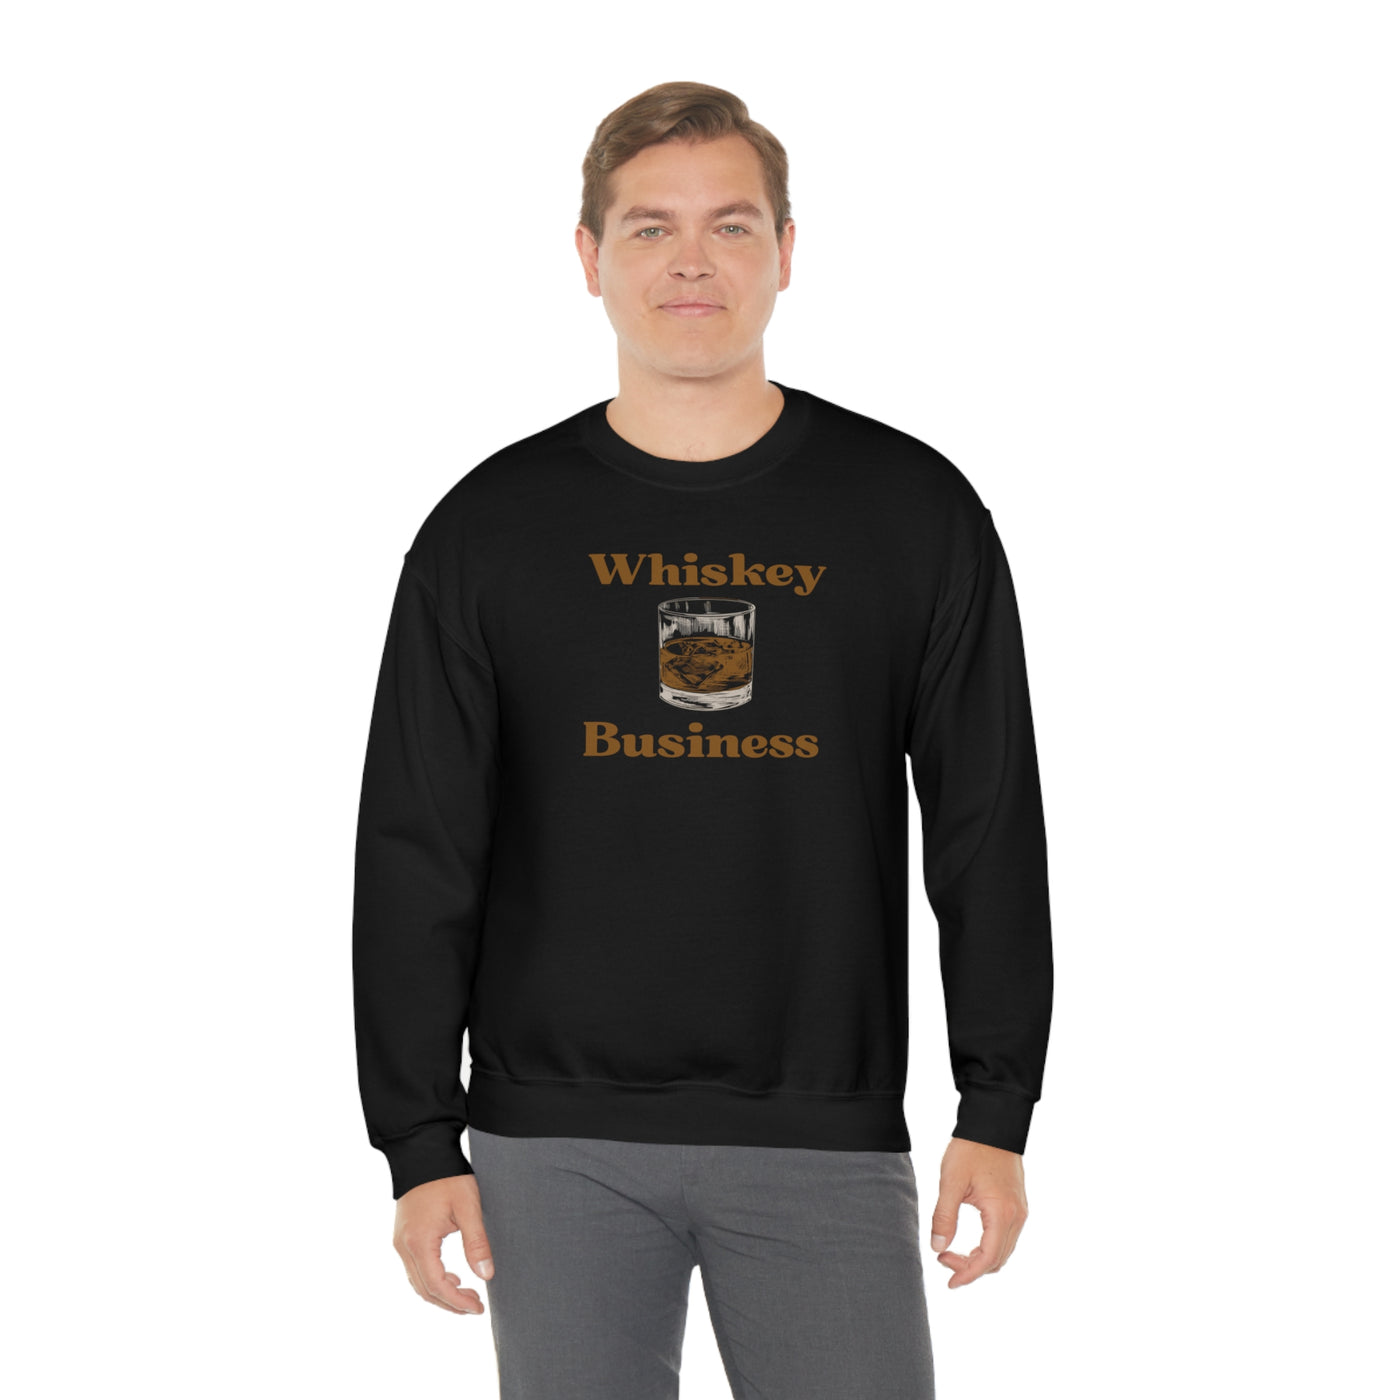 Whiskey Business Crewneck Sweatshirt